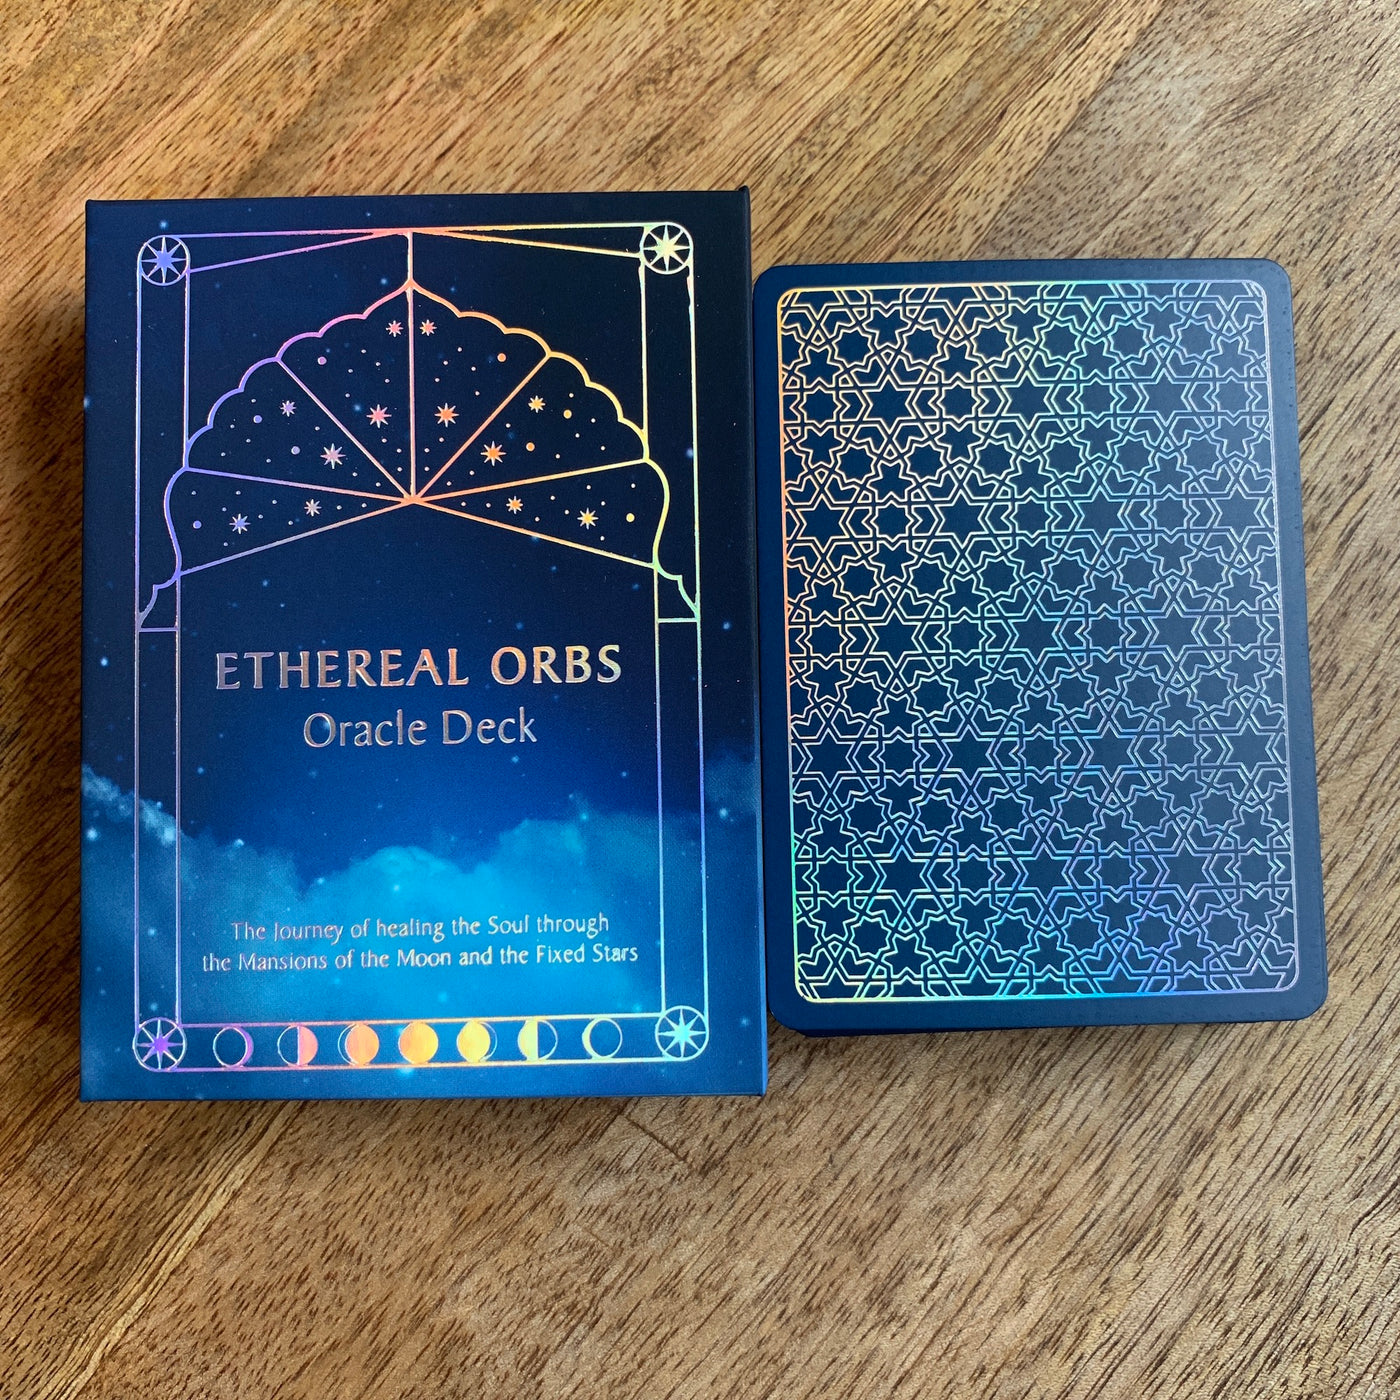 Ethereal Orbs Oracle